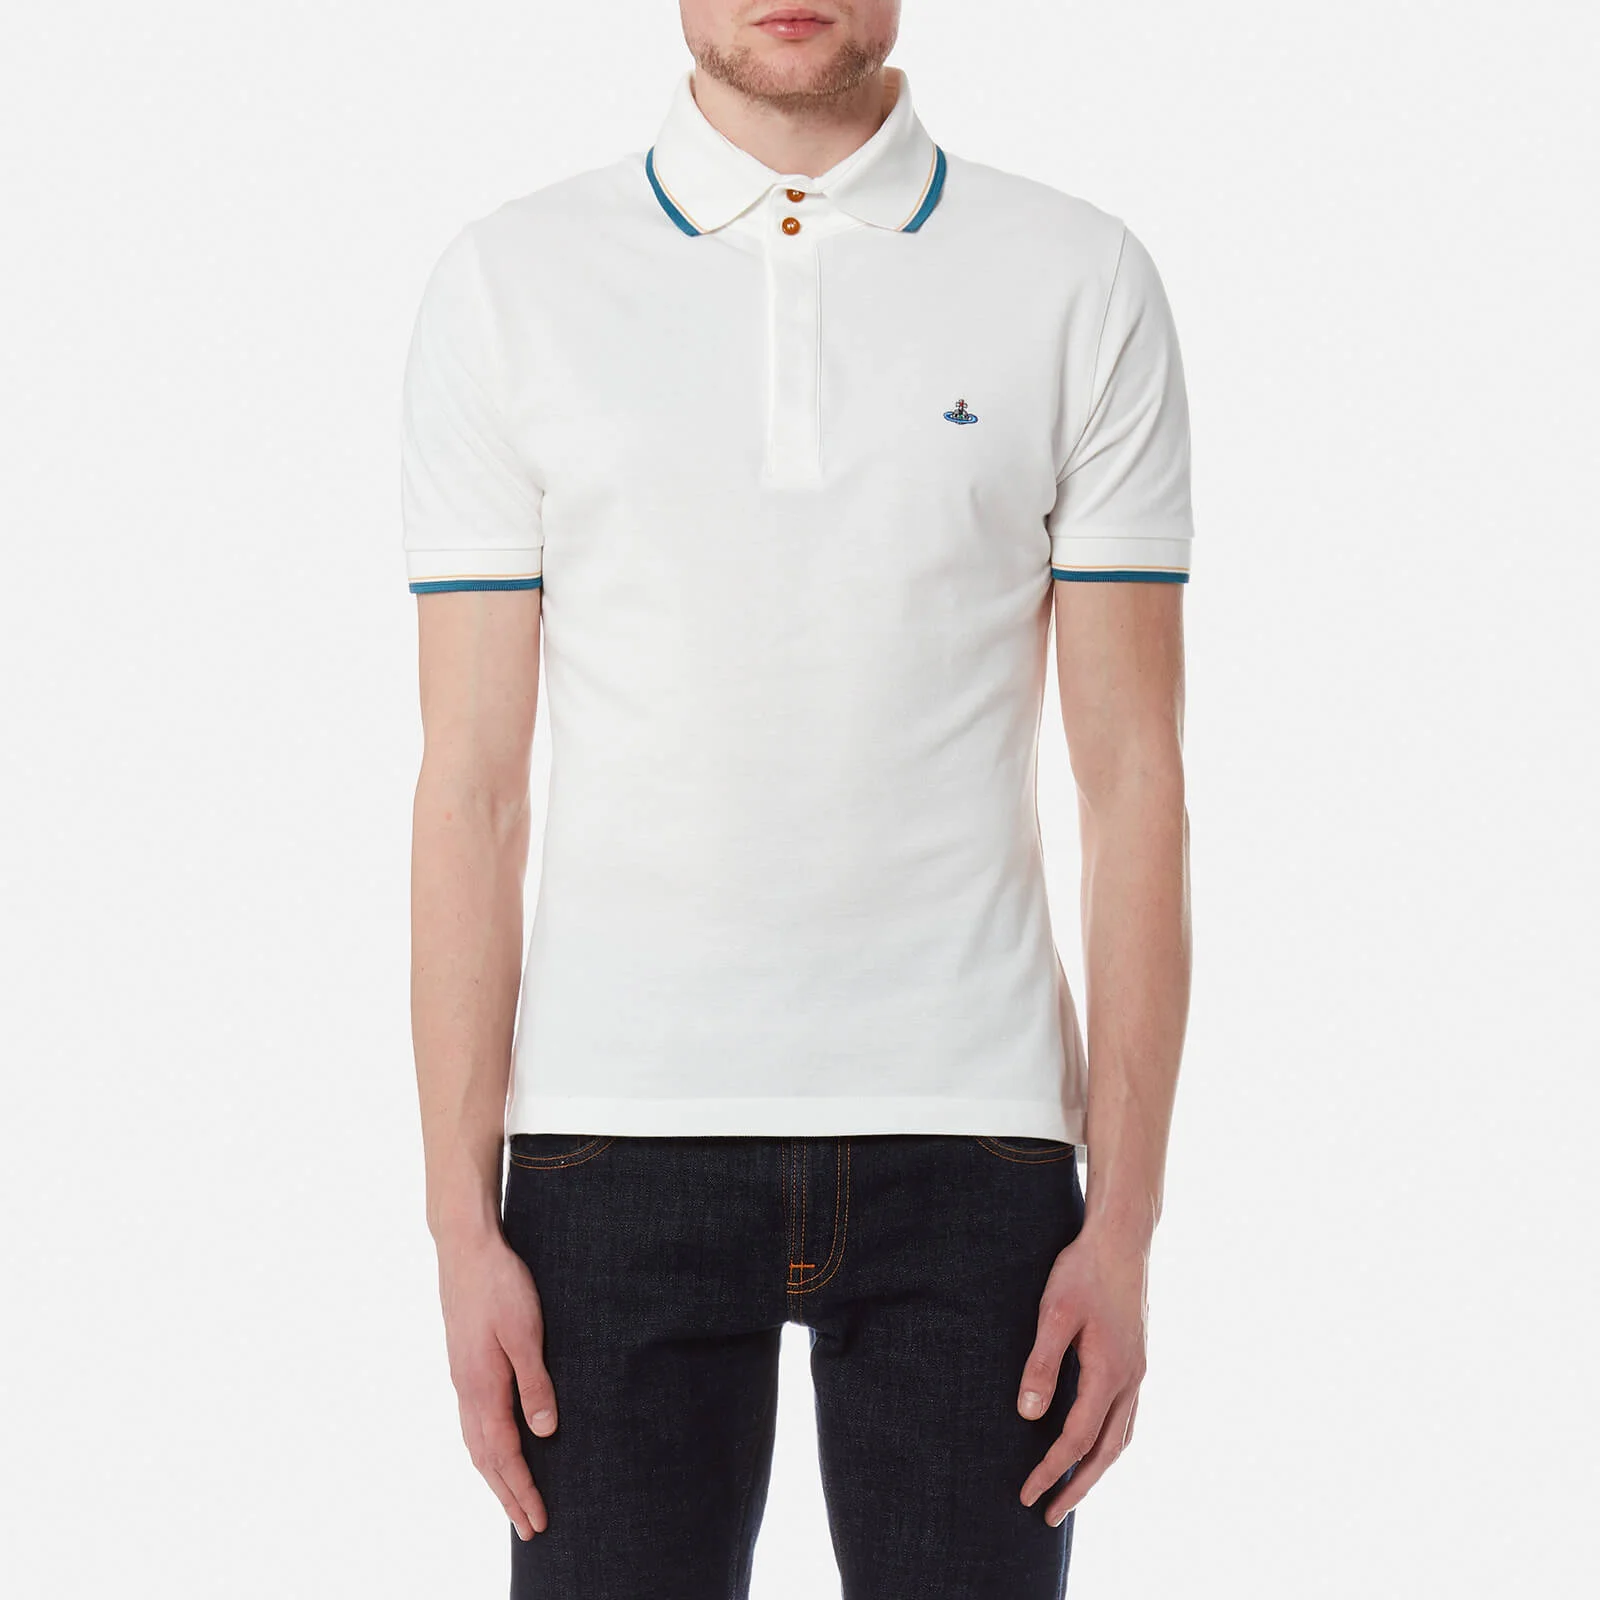 Vivienne Westwood Men's Pique Overlock Polo Shirt - Off White Image 1